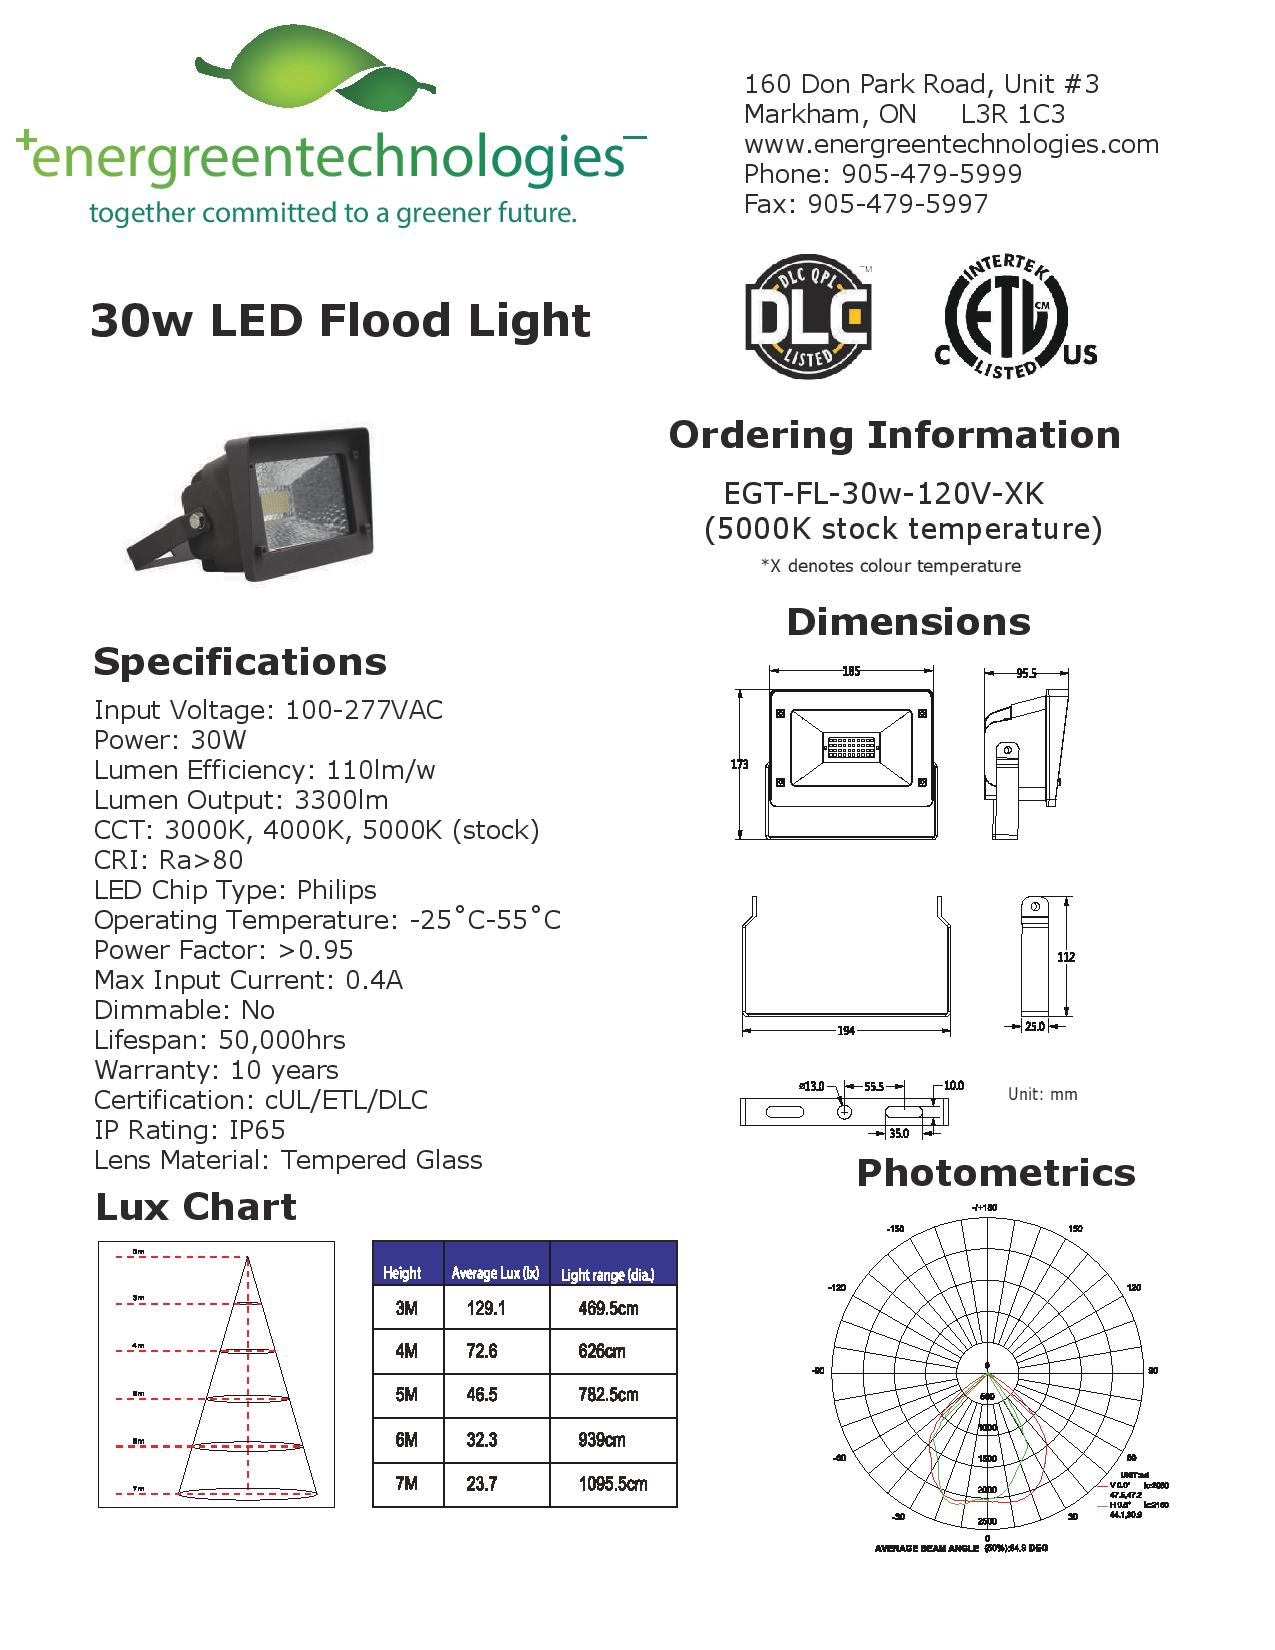 Led light specification